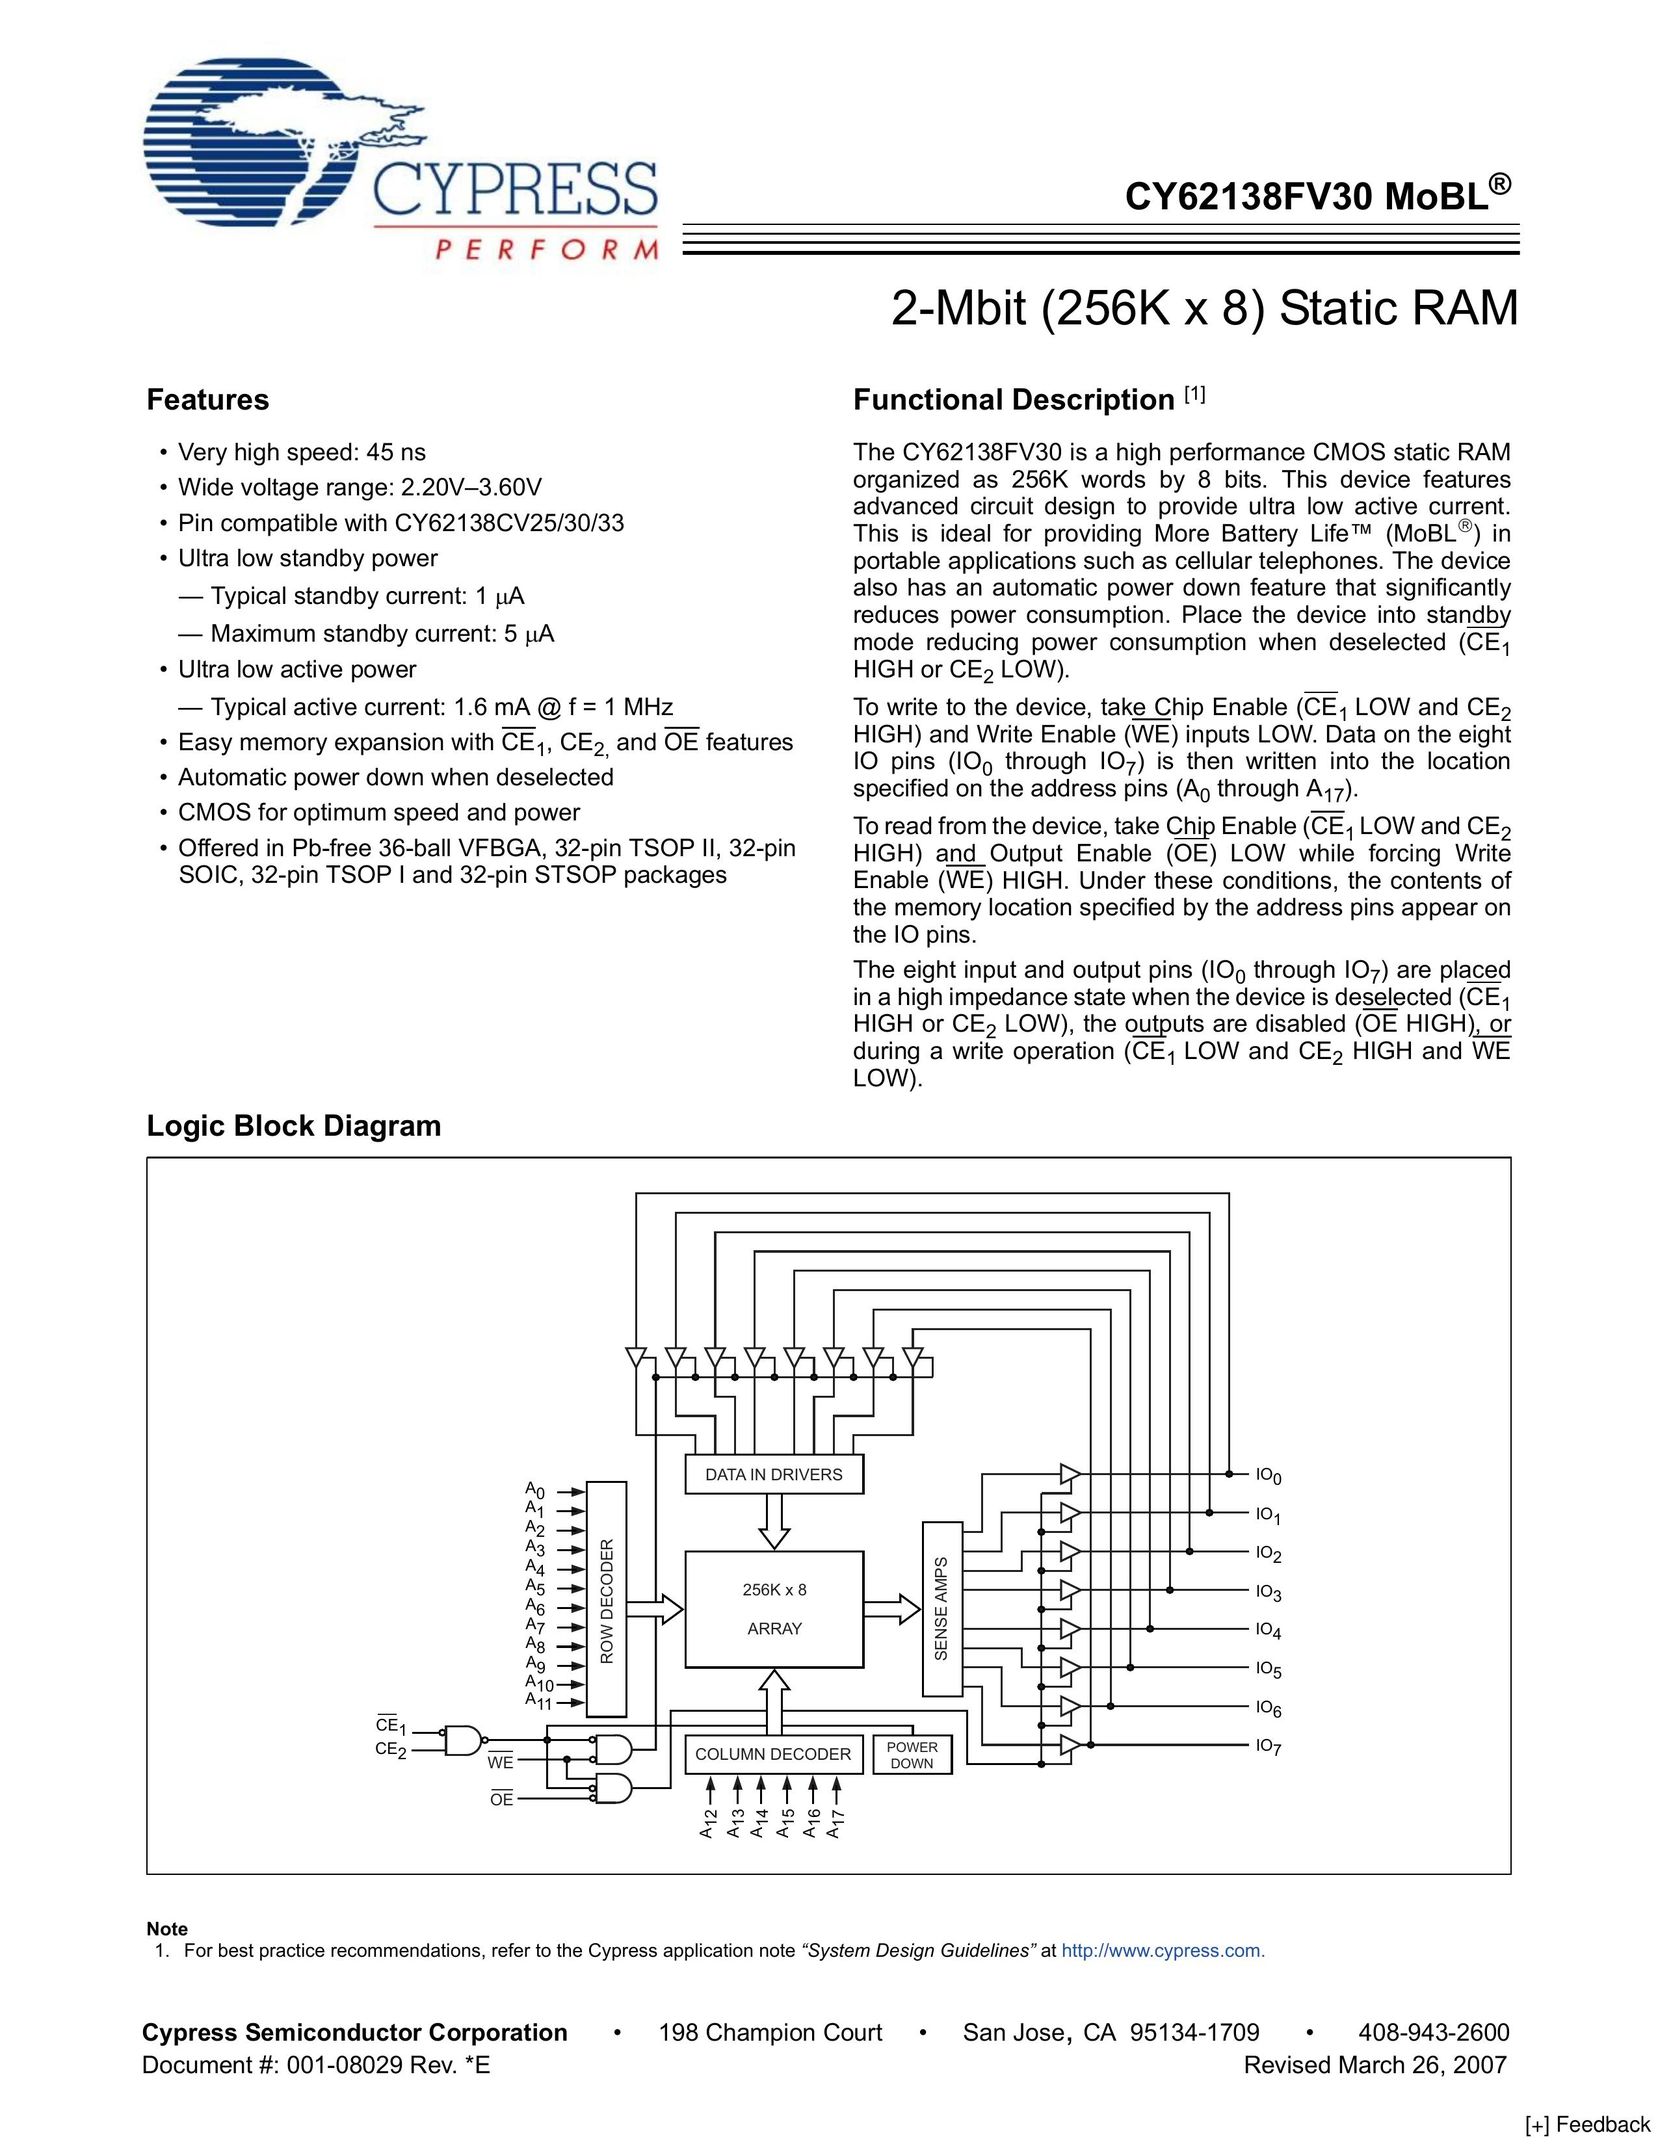 Cypress CY62138CV30 Computer Hardware User Manual